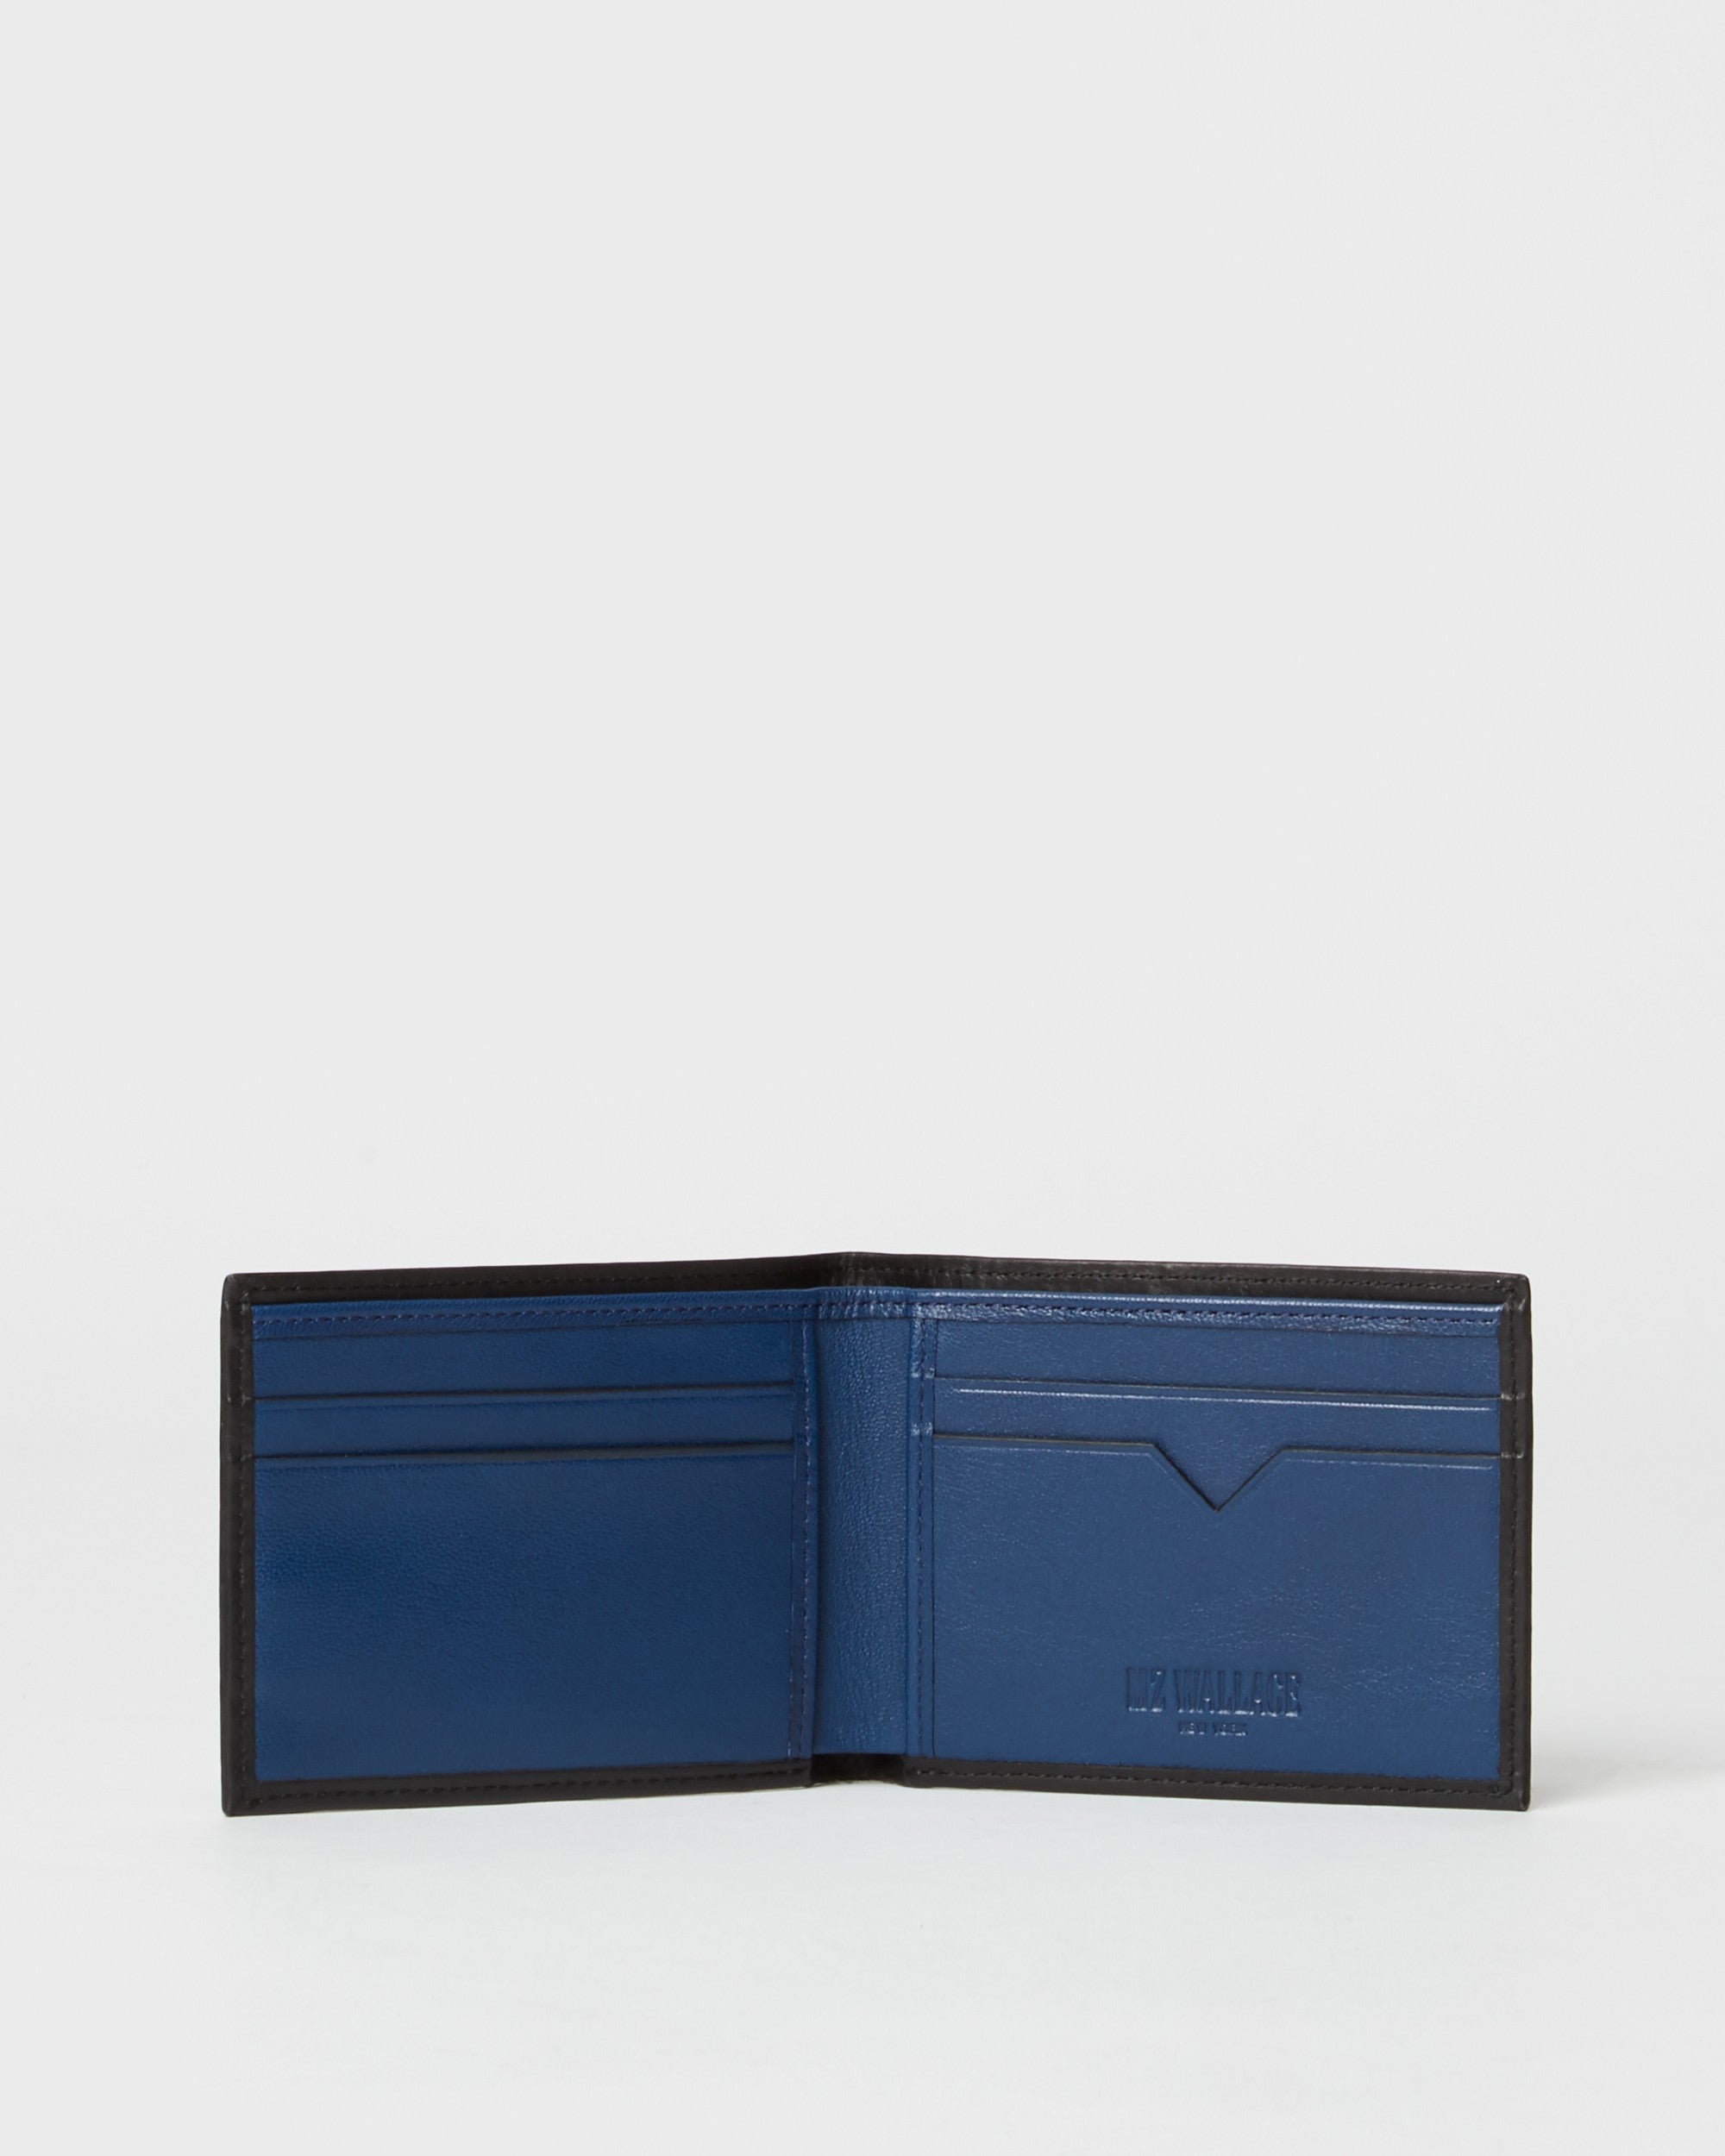 Rory Wrist Strap Wallet